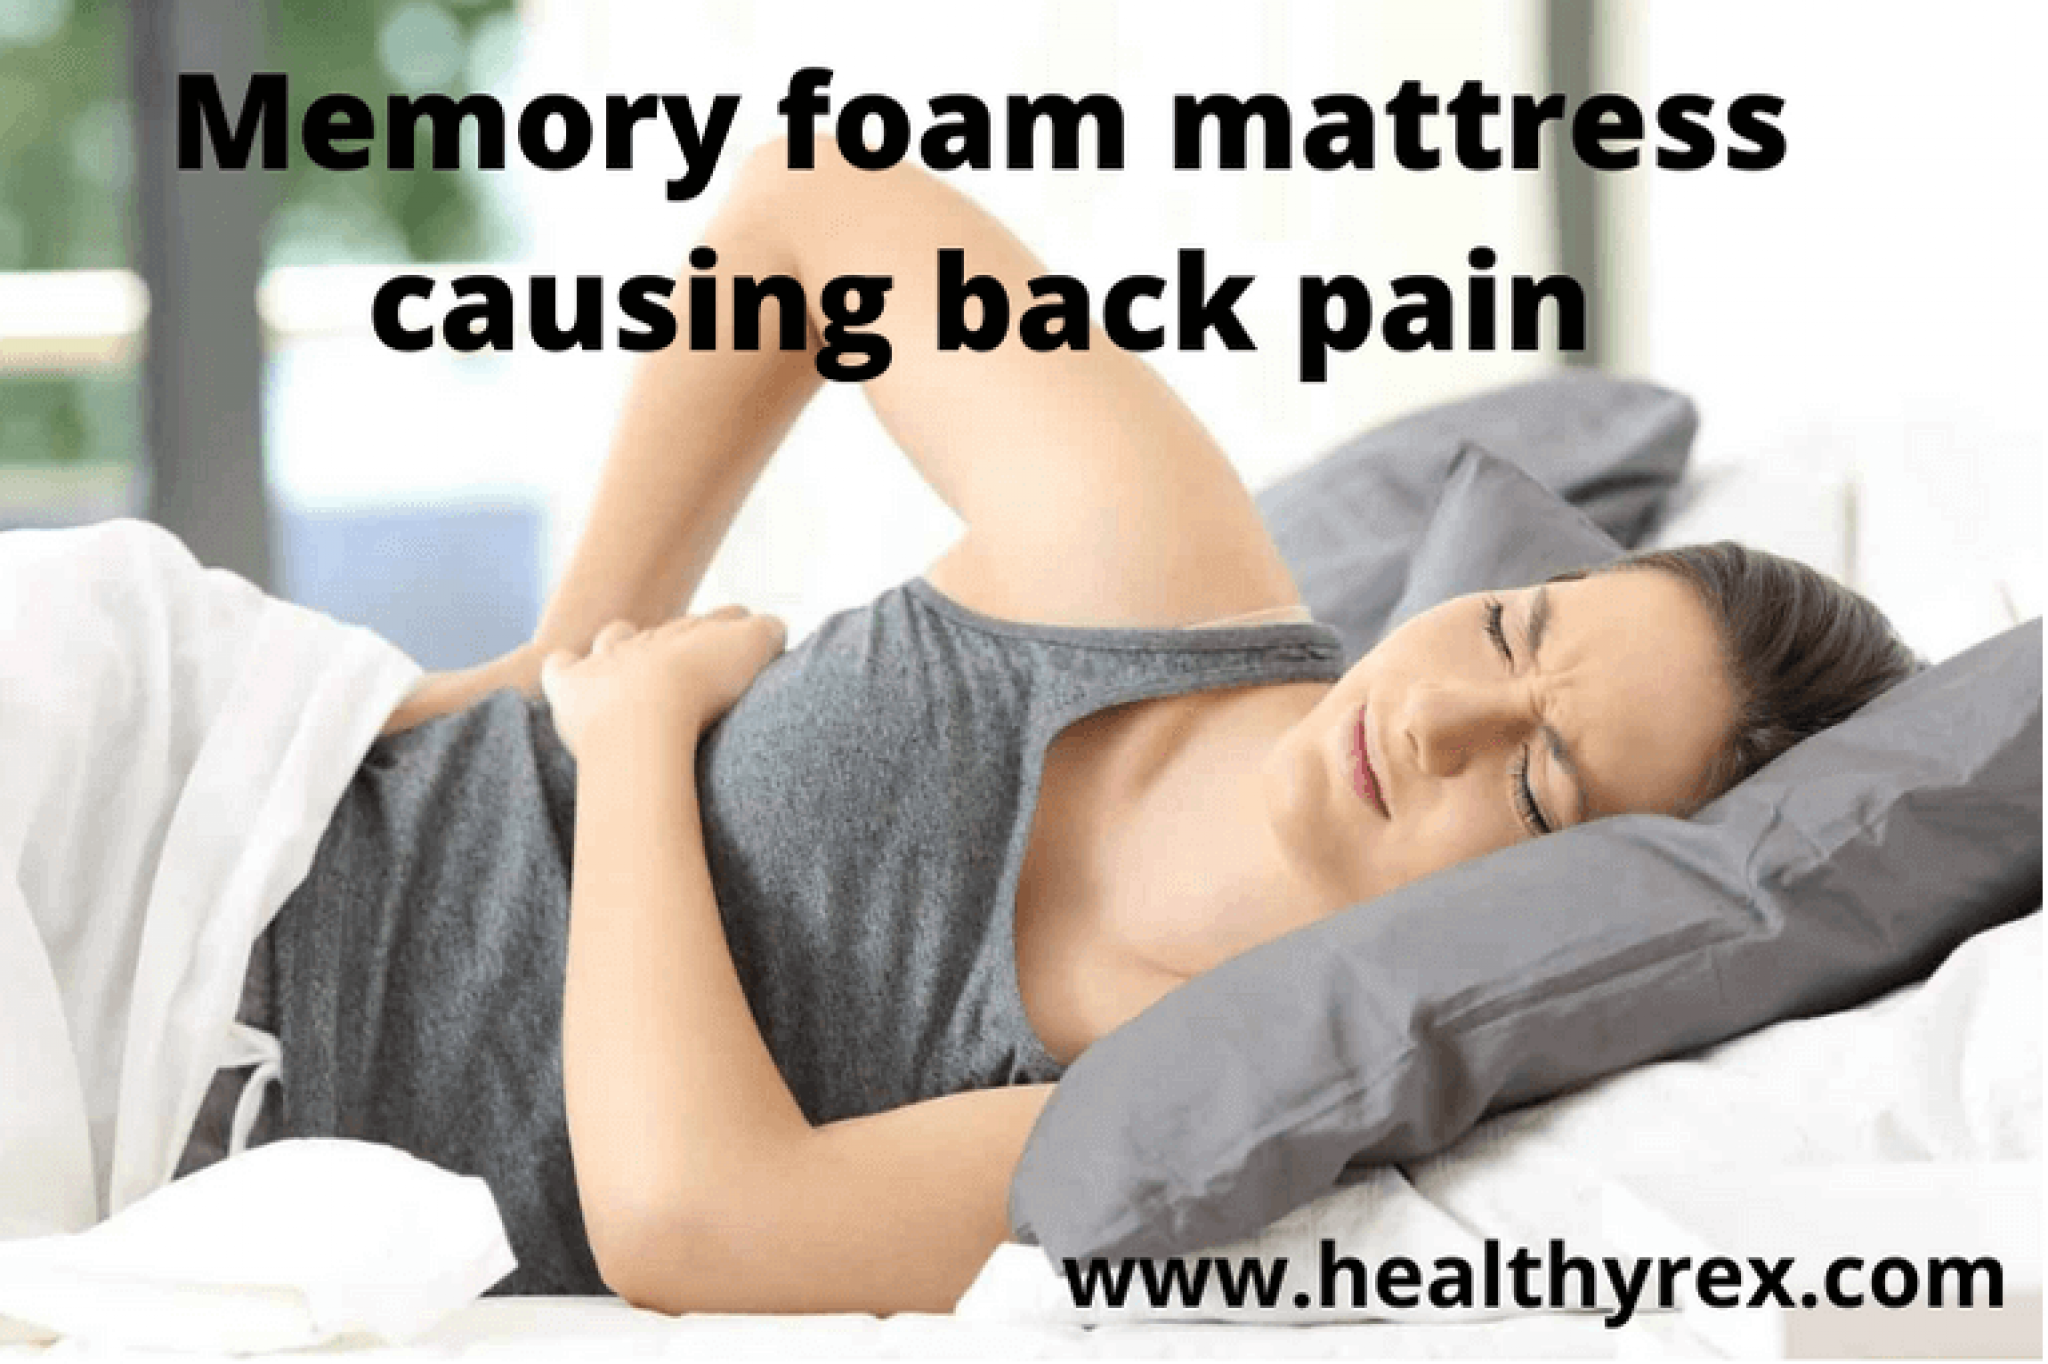 can memory foam mattress cause back pain